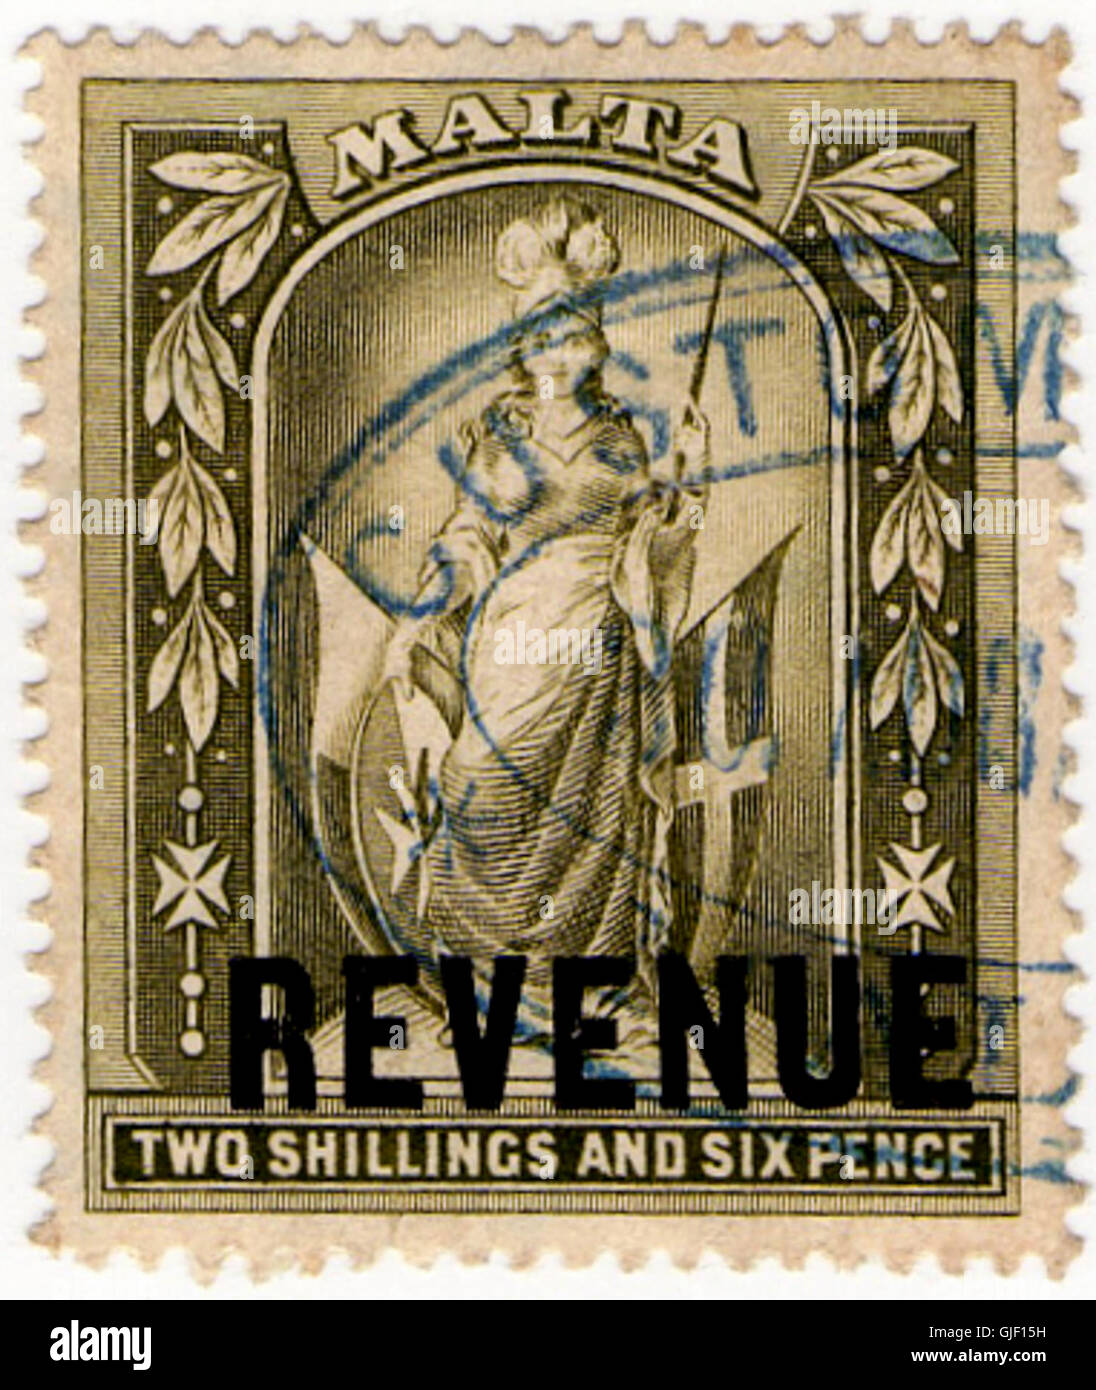 1902 2s6d Olive-Green revenue stamp of Malta Stock Photo